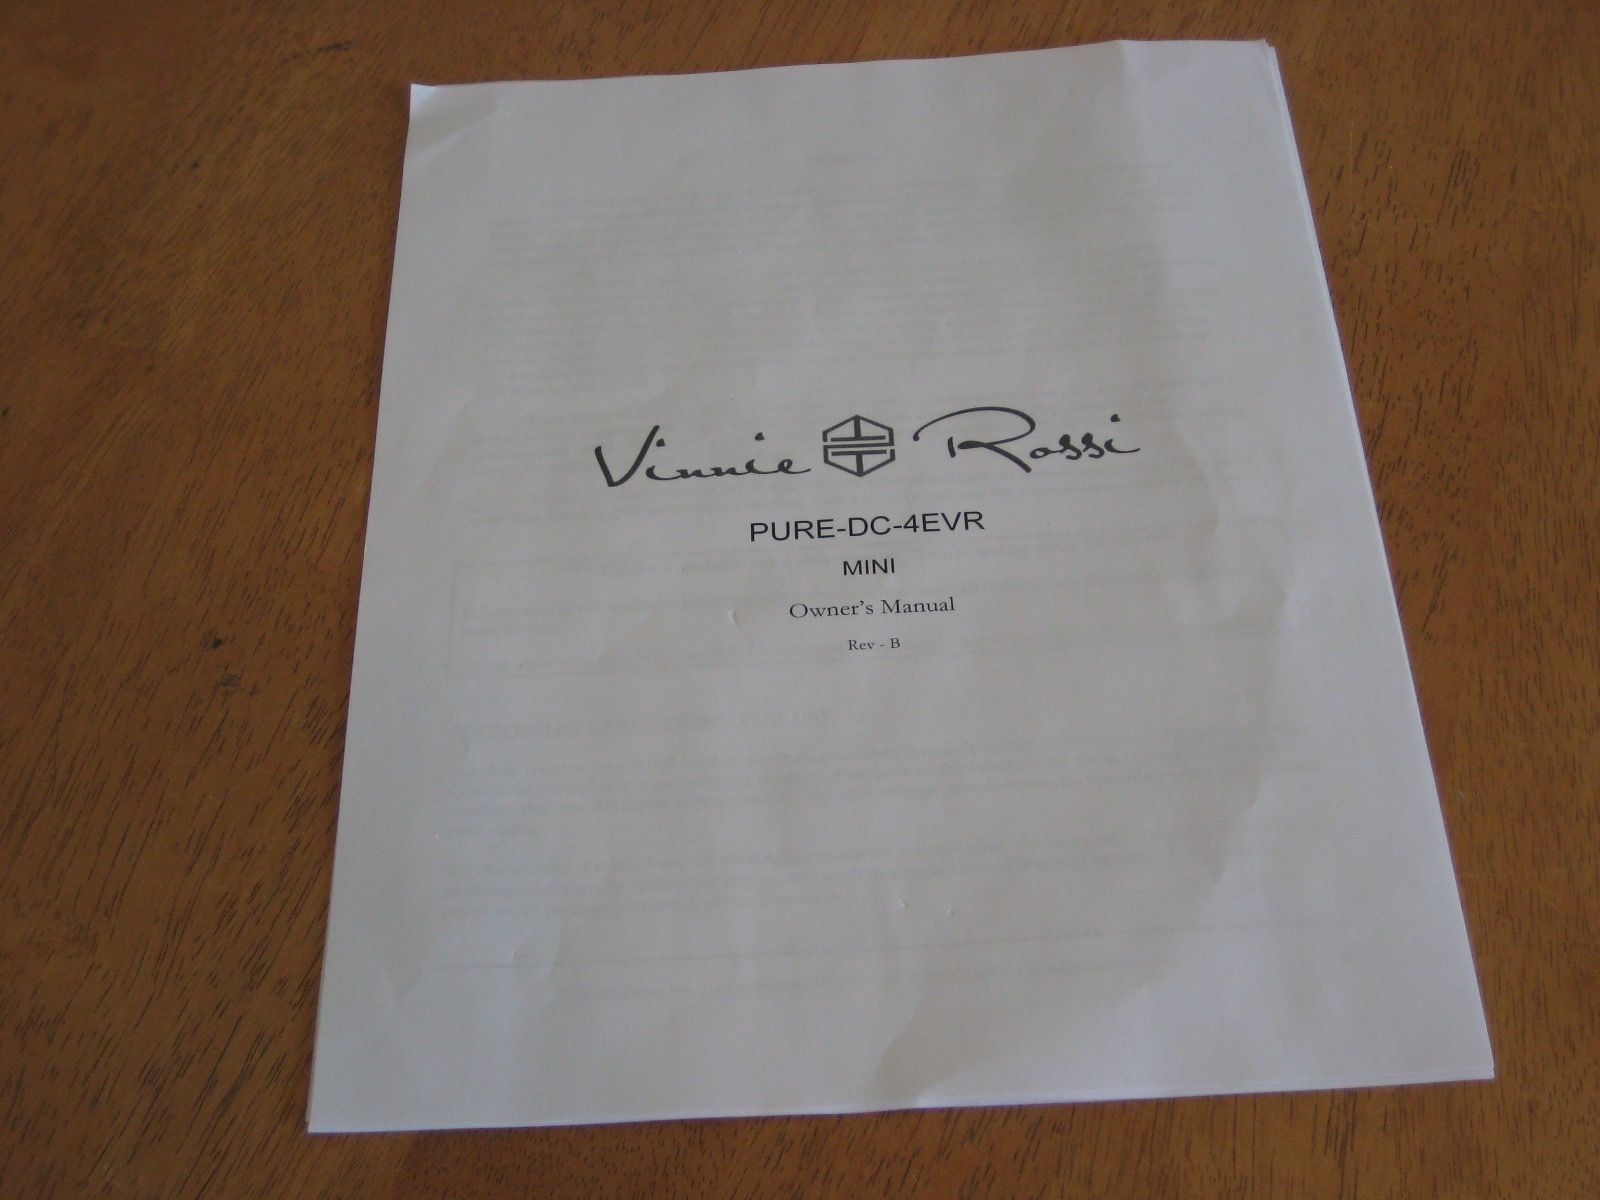 Vinnie Rossi Lio Mini Pure DC-4-Ever Gene Rubin Audio #...